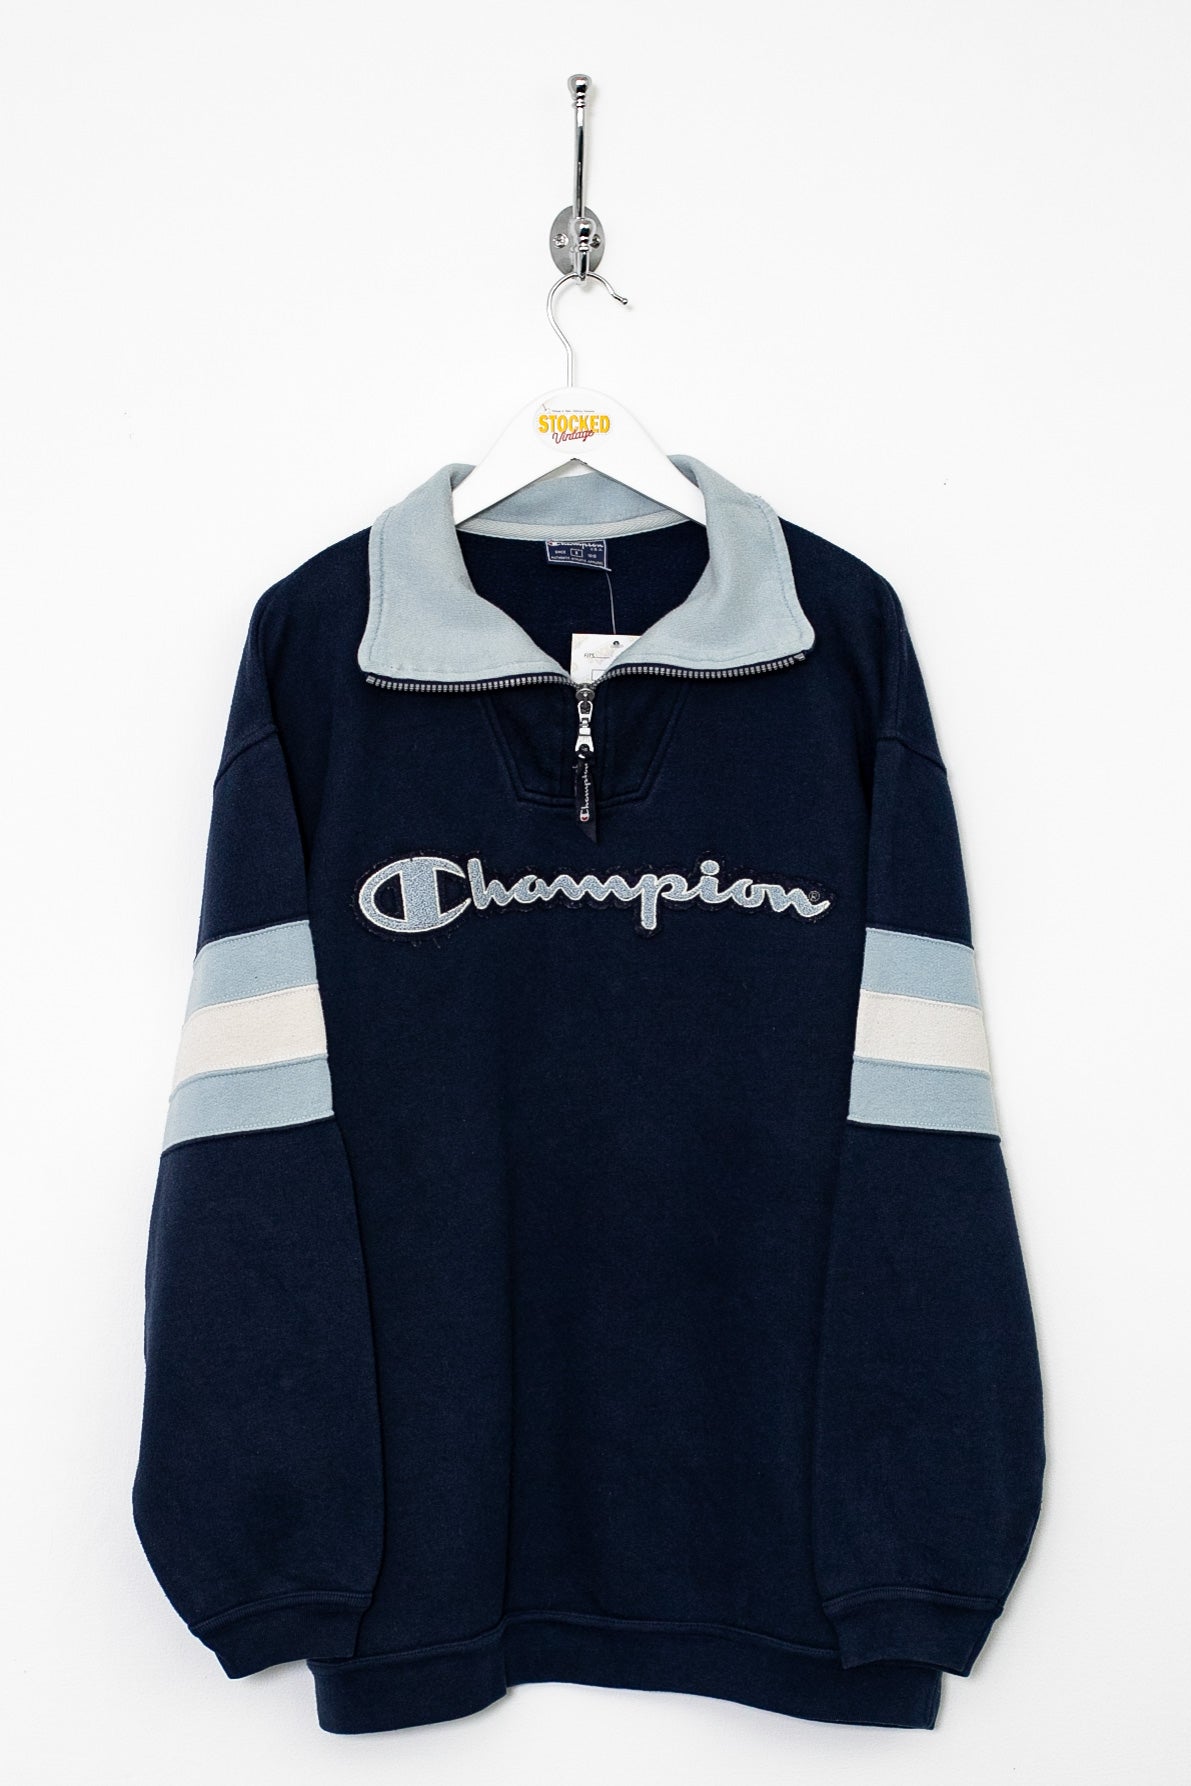 (S) – Zip 1/4 Sweatshirt Vintage Stocked Champion 00s